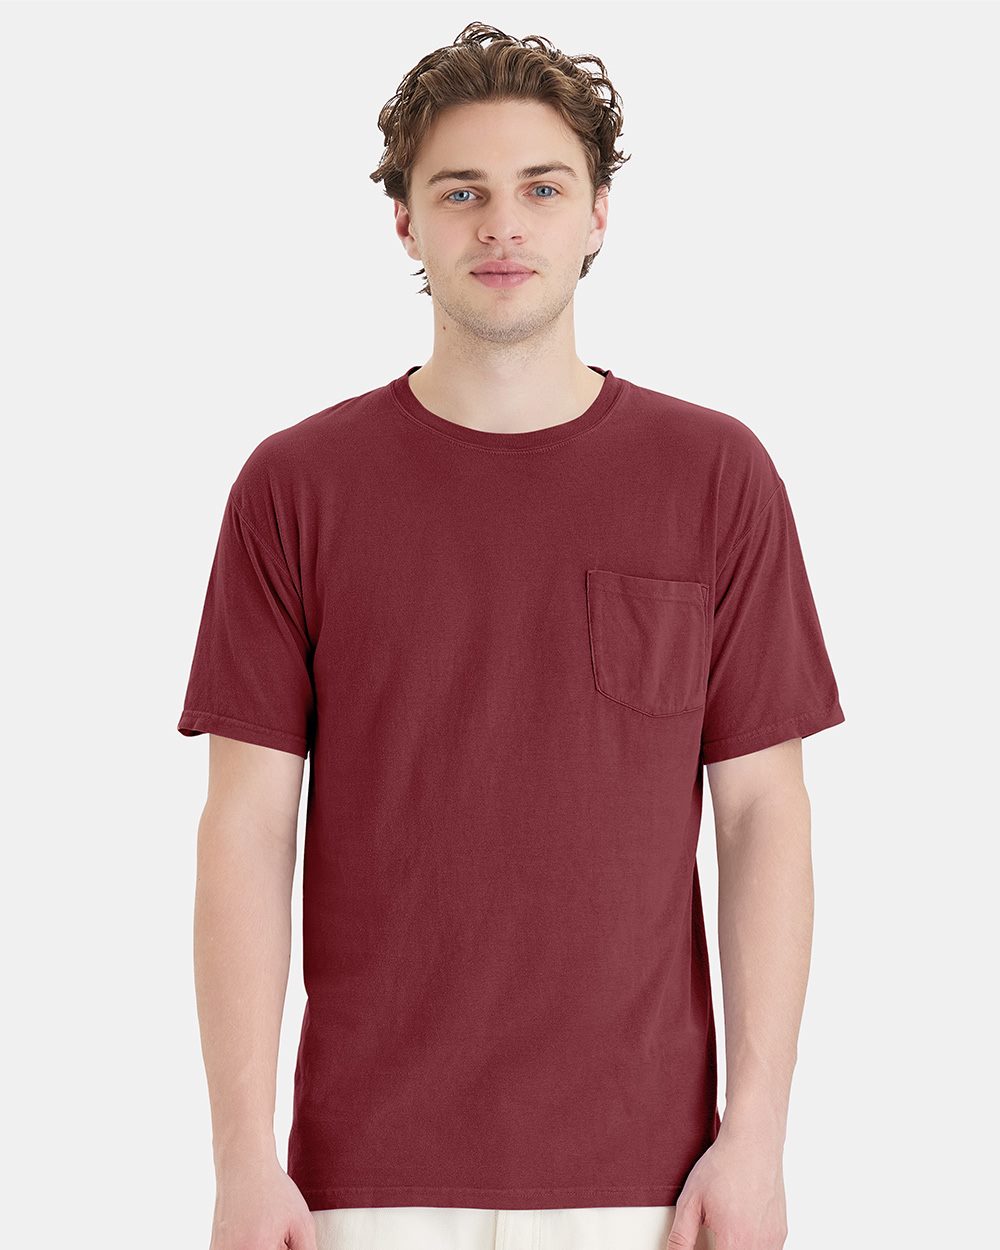 ComfortWash by Hanes GDH100 Garment-Dyed T-Shirt - Coral Craze, S